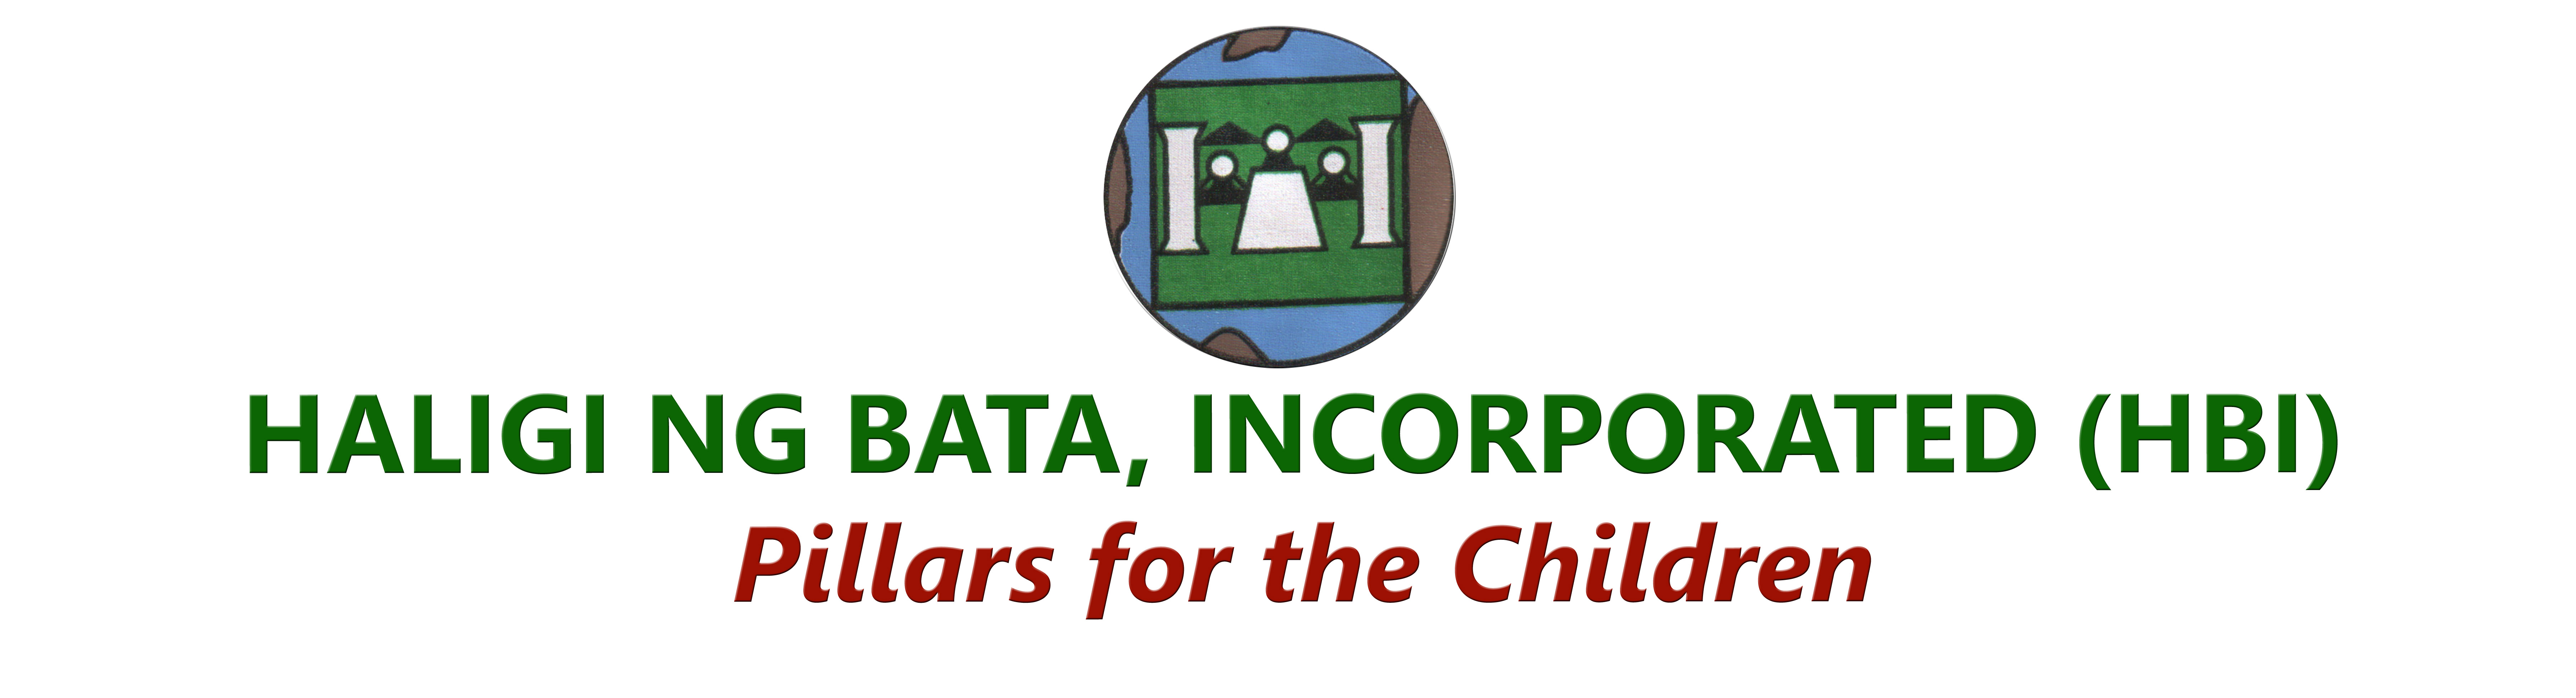 Haligi ng Bata, Inc. (Pillars for the Children) logo